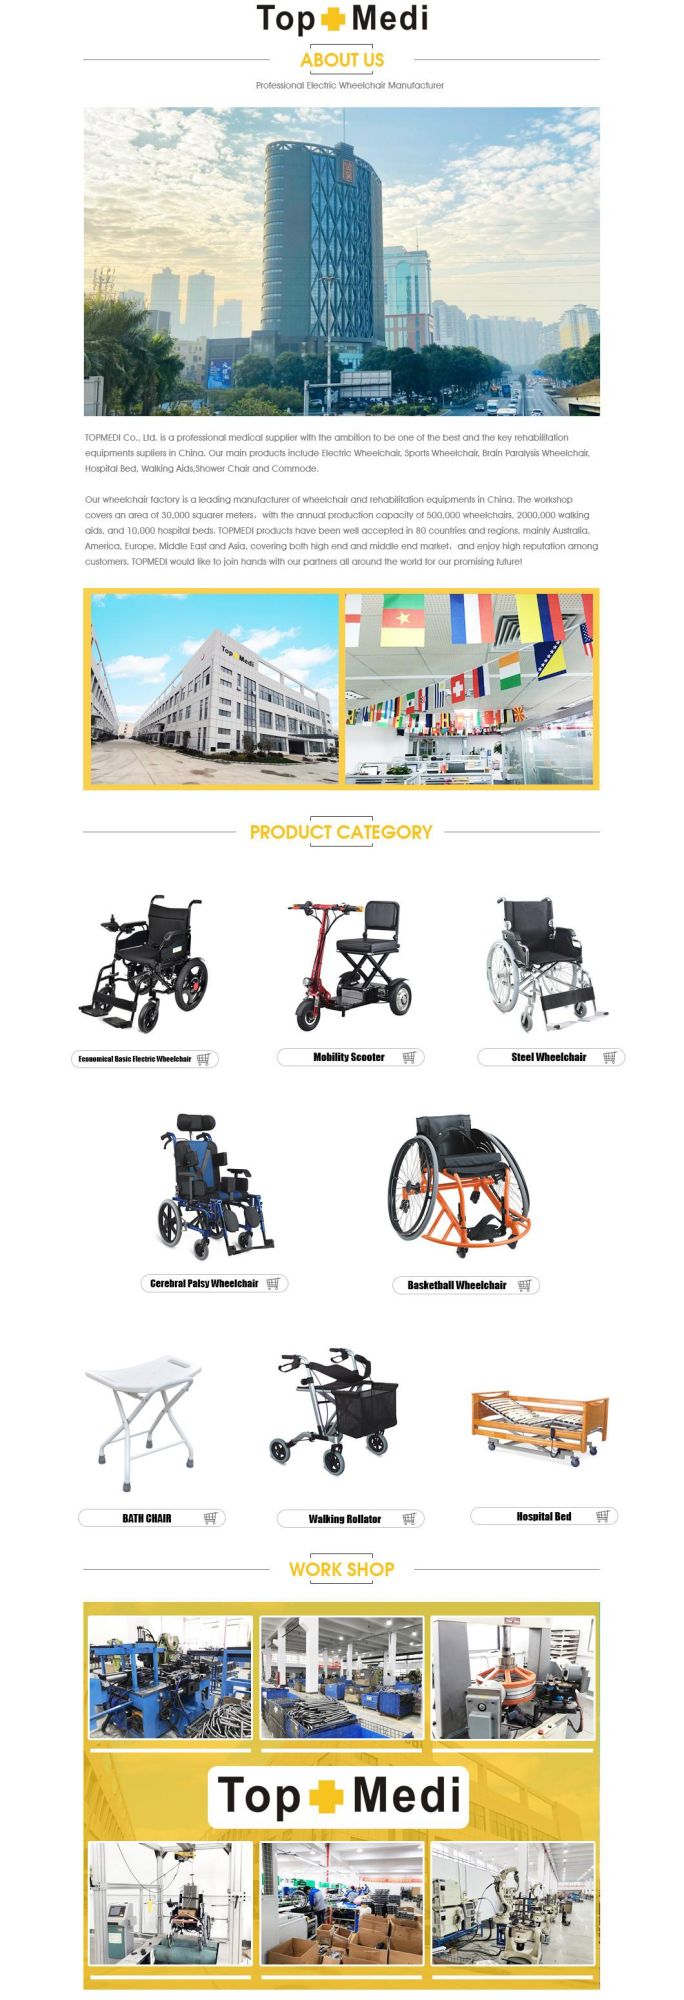 Topmedi Easy Carry Aluminum Popular Wheelchair for Invalid